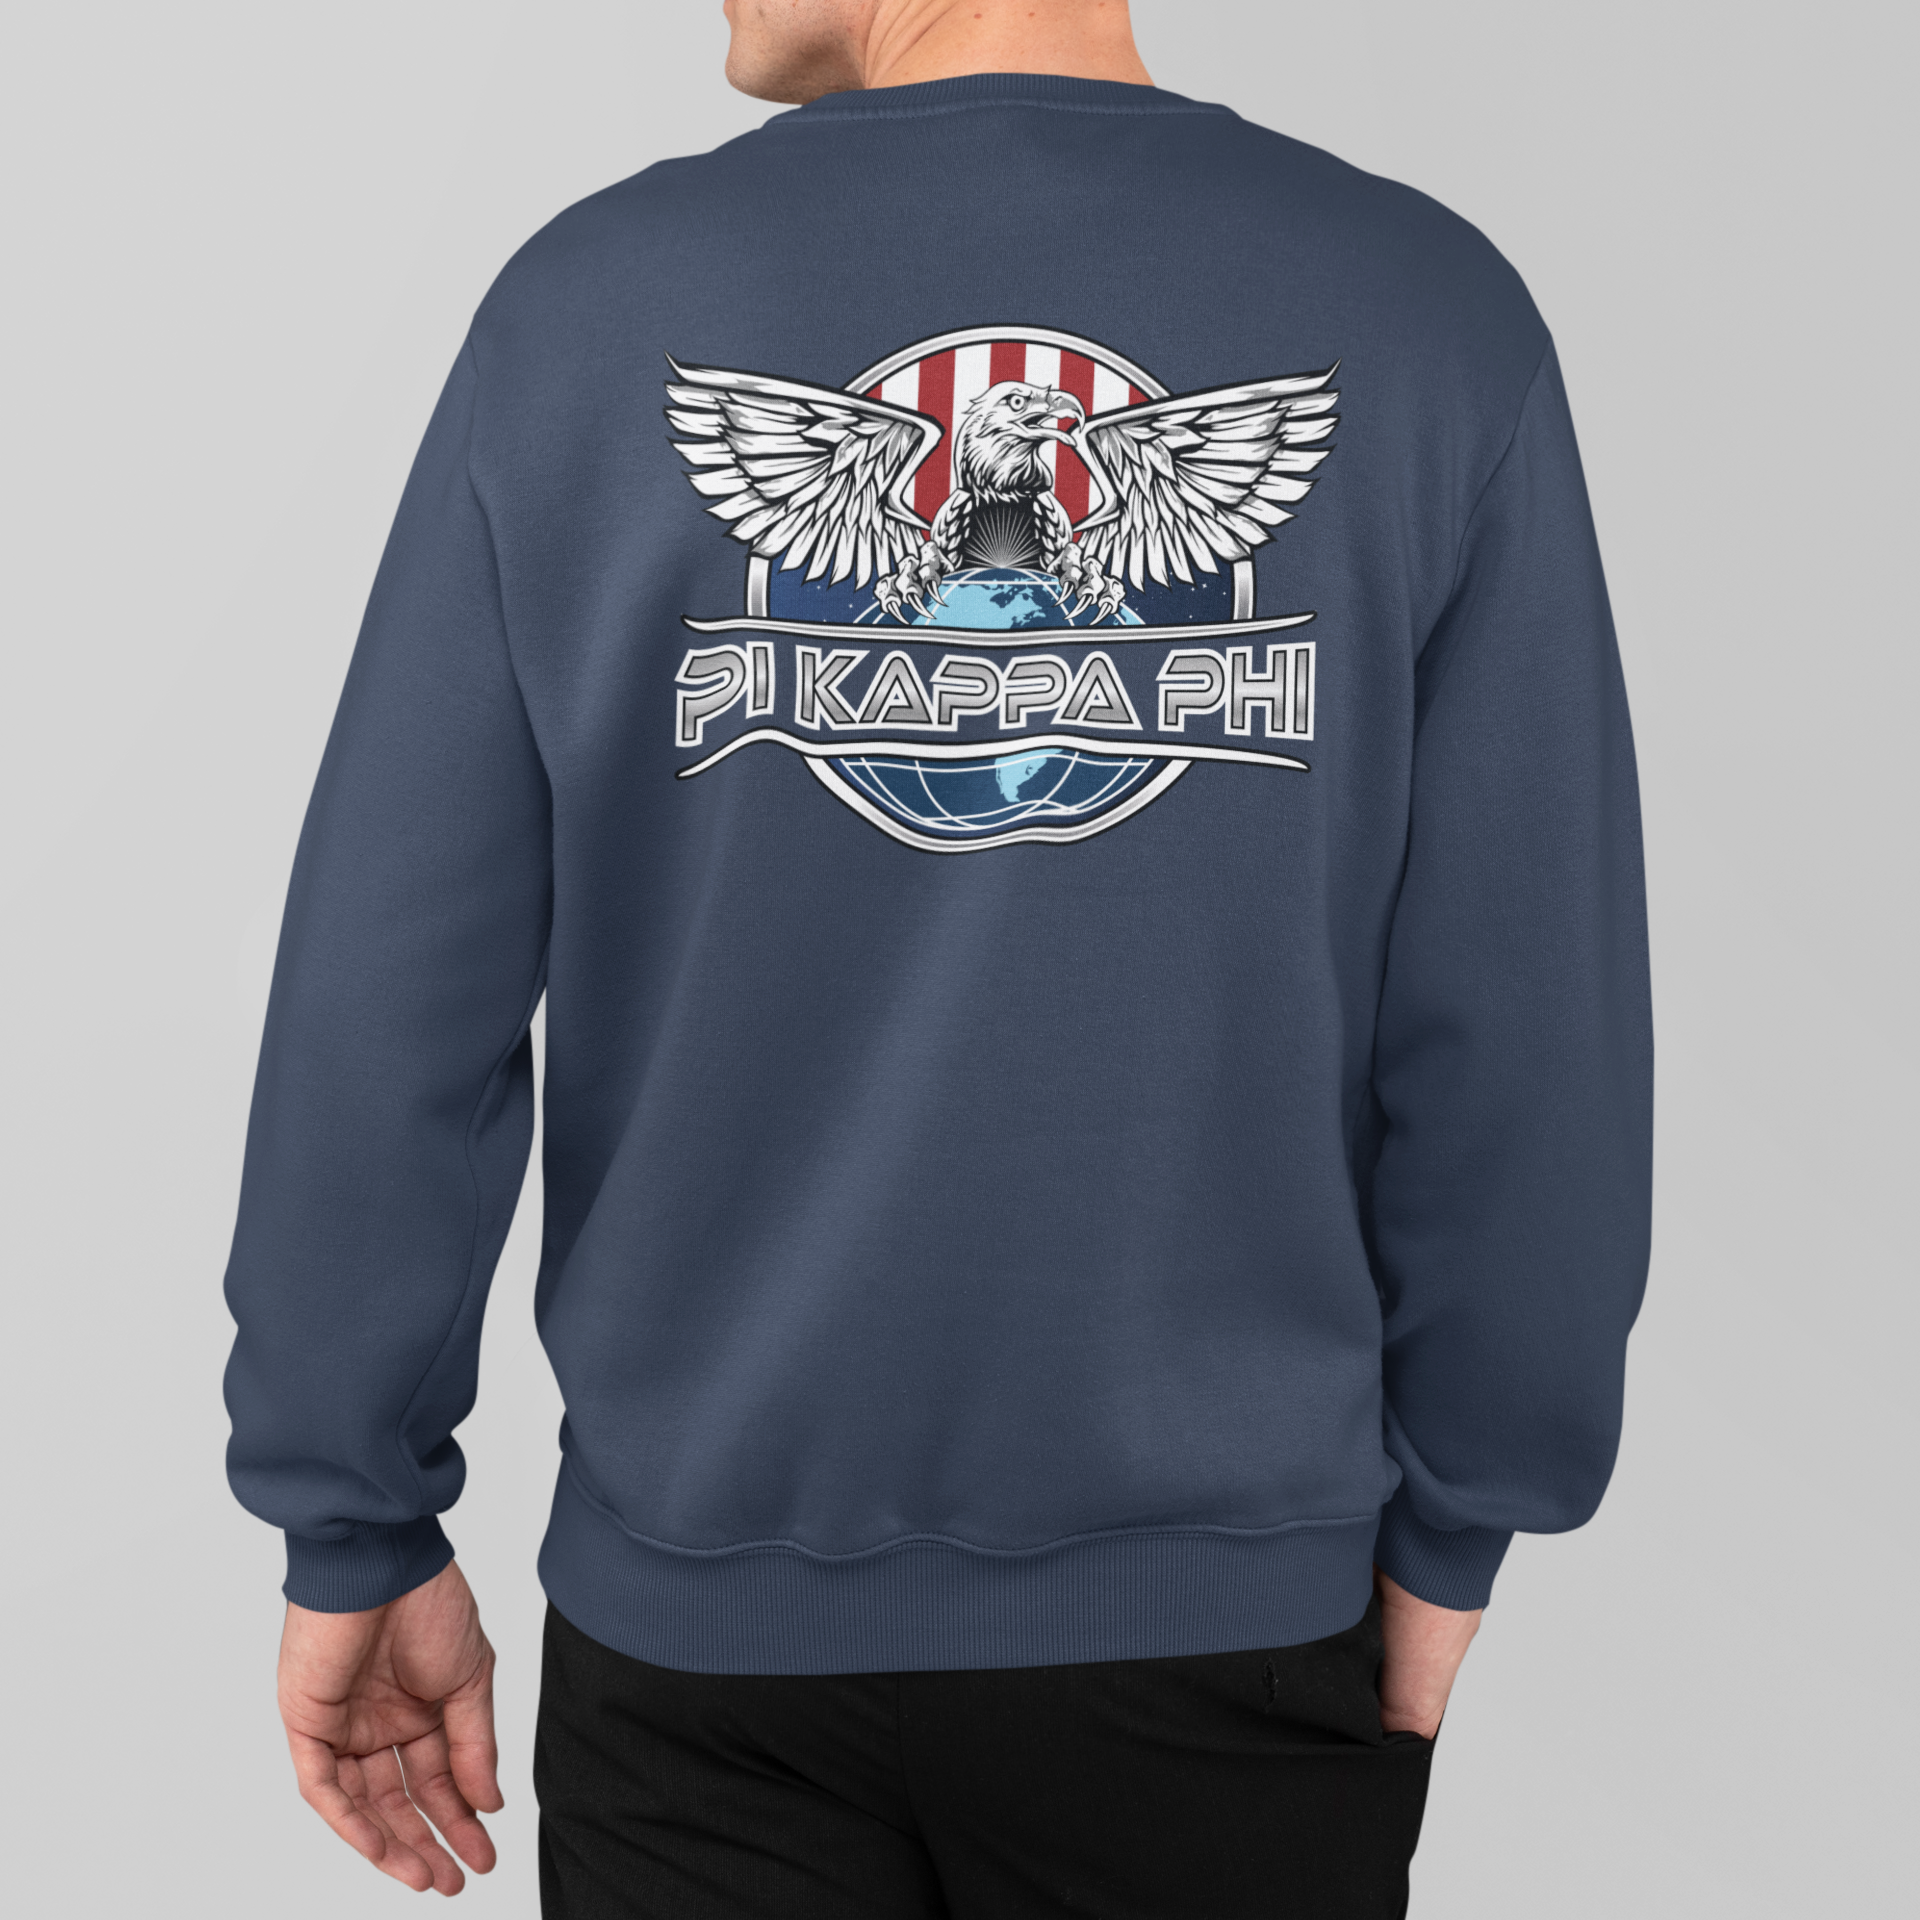 Pi Kappa Phi Graphic Crewneck Sweatshirt | The Fraternal Order | Pi Kappa Phi Apparel and Merchandise model 